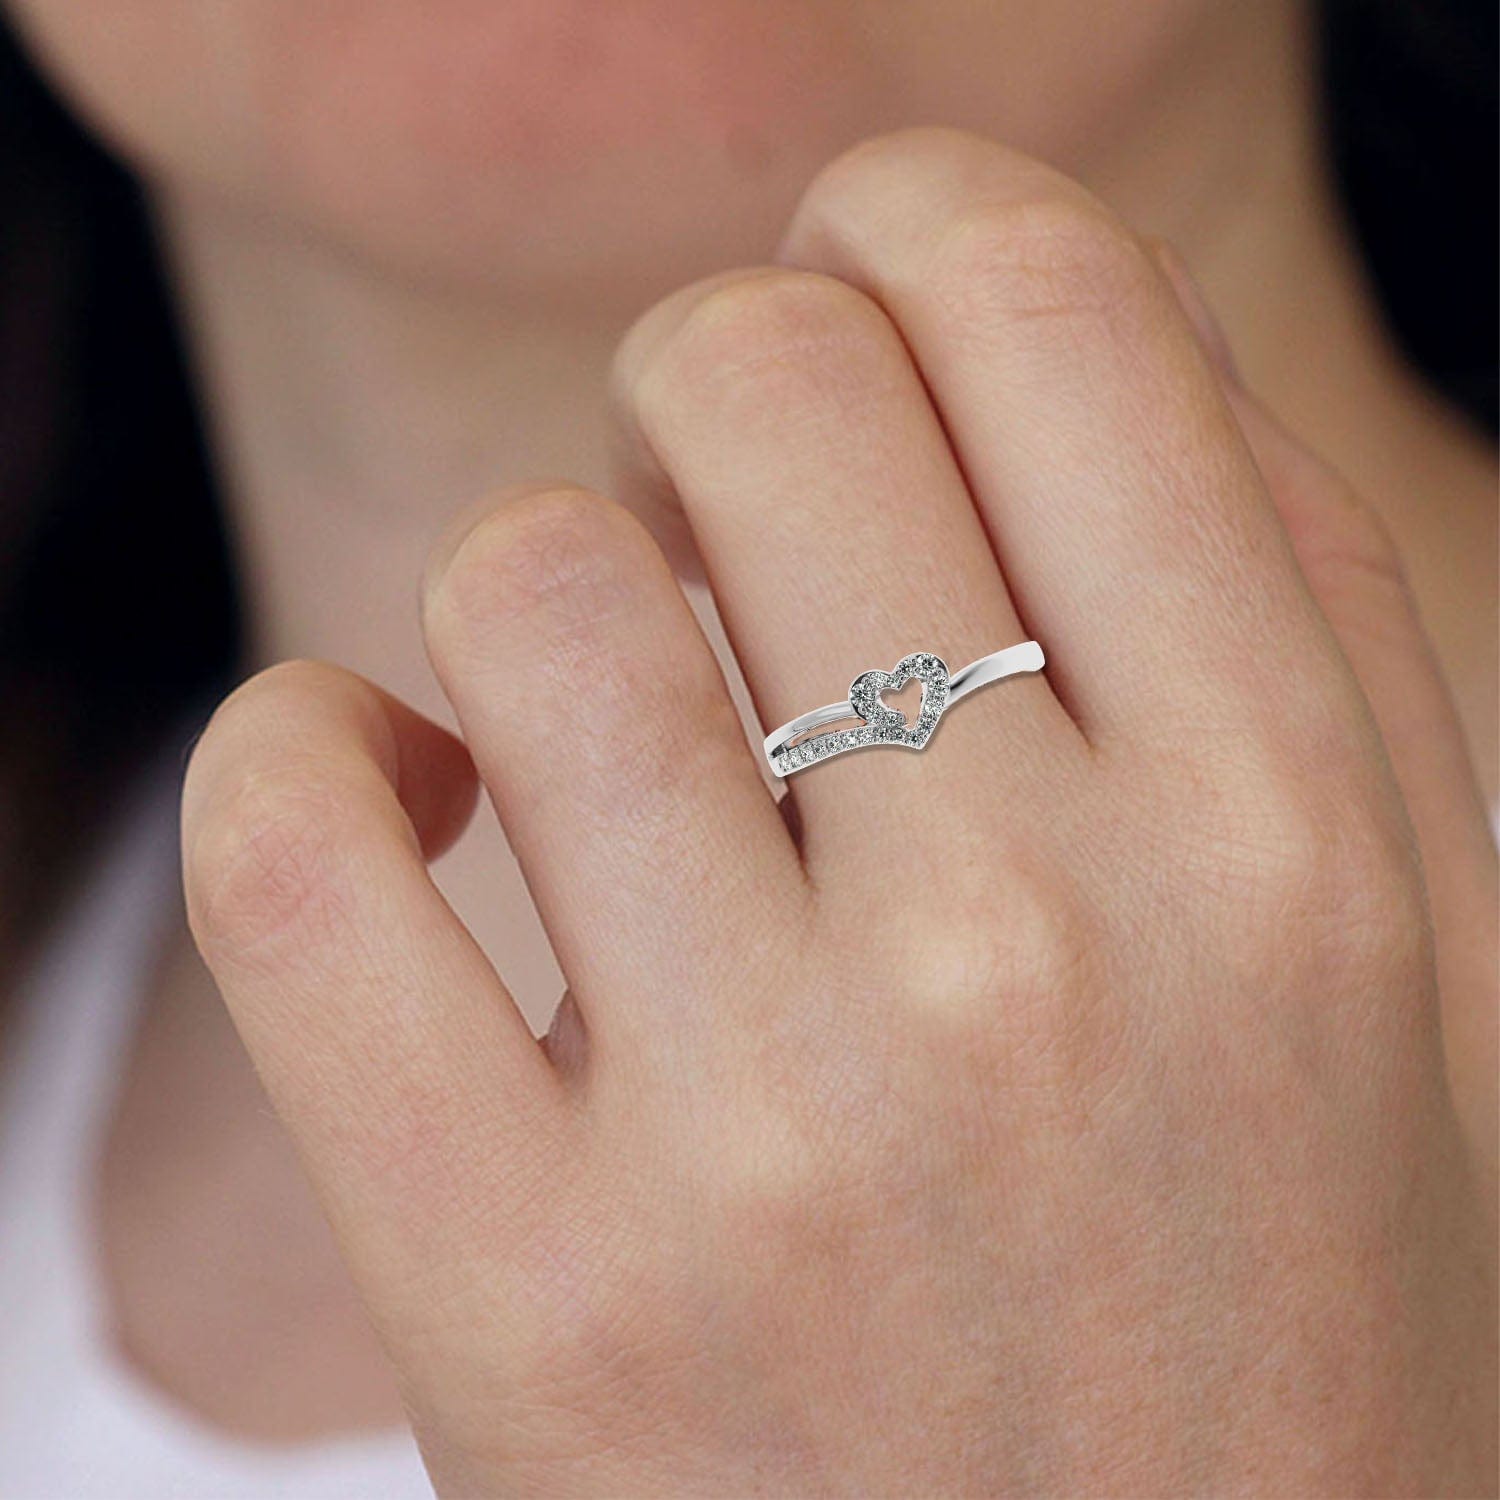 Engagement Ring in Girls Finger Stock Image - Image of love, sweet:  154518157